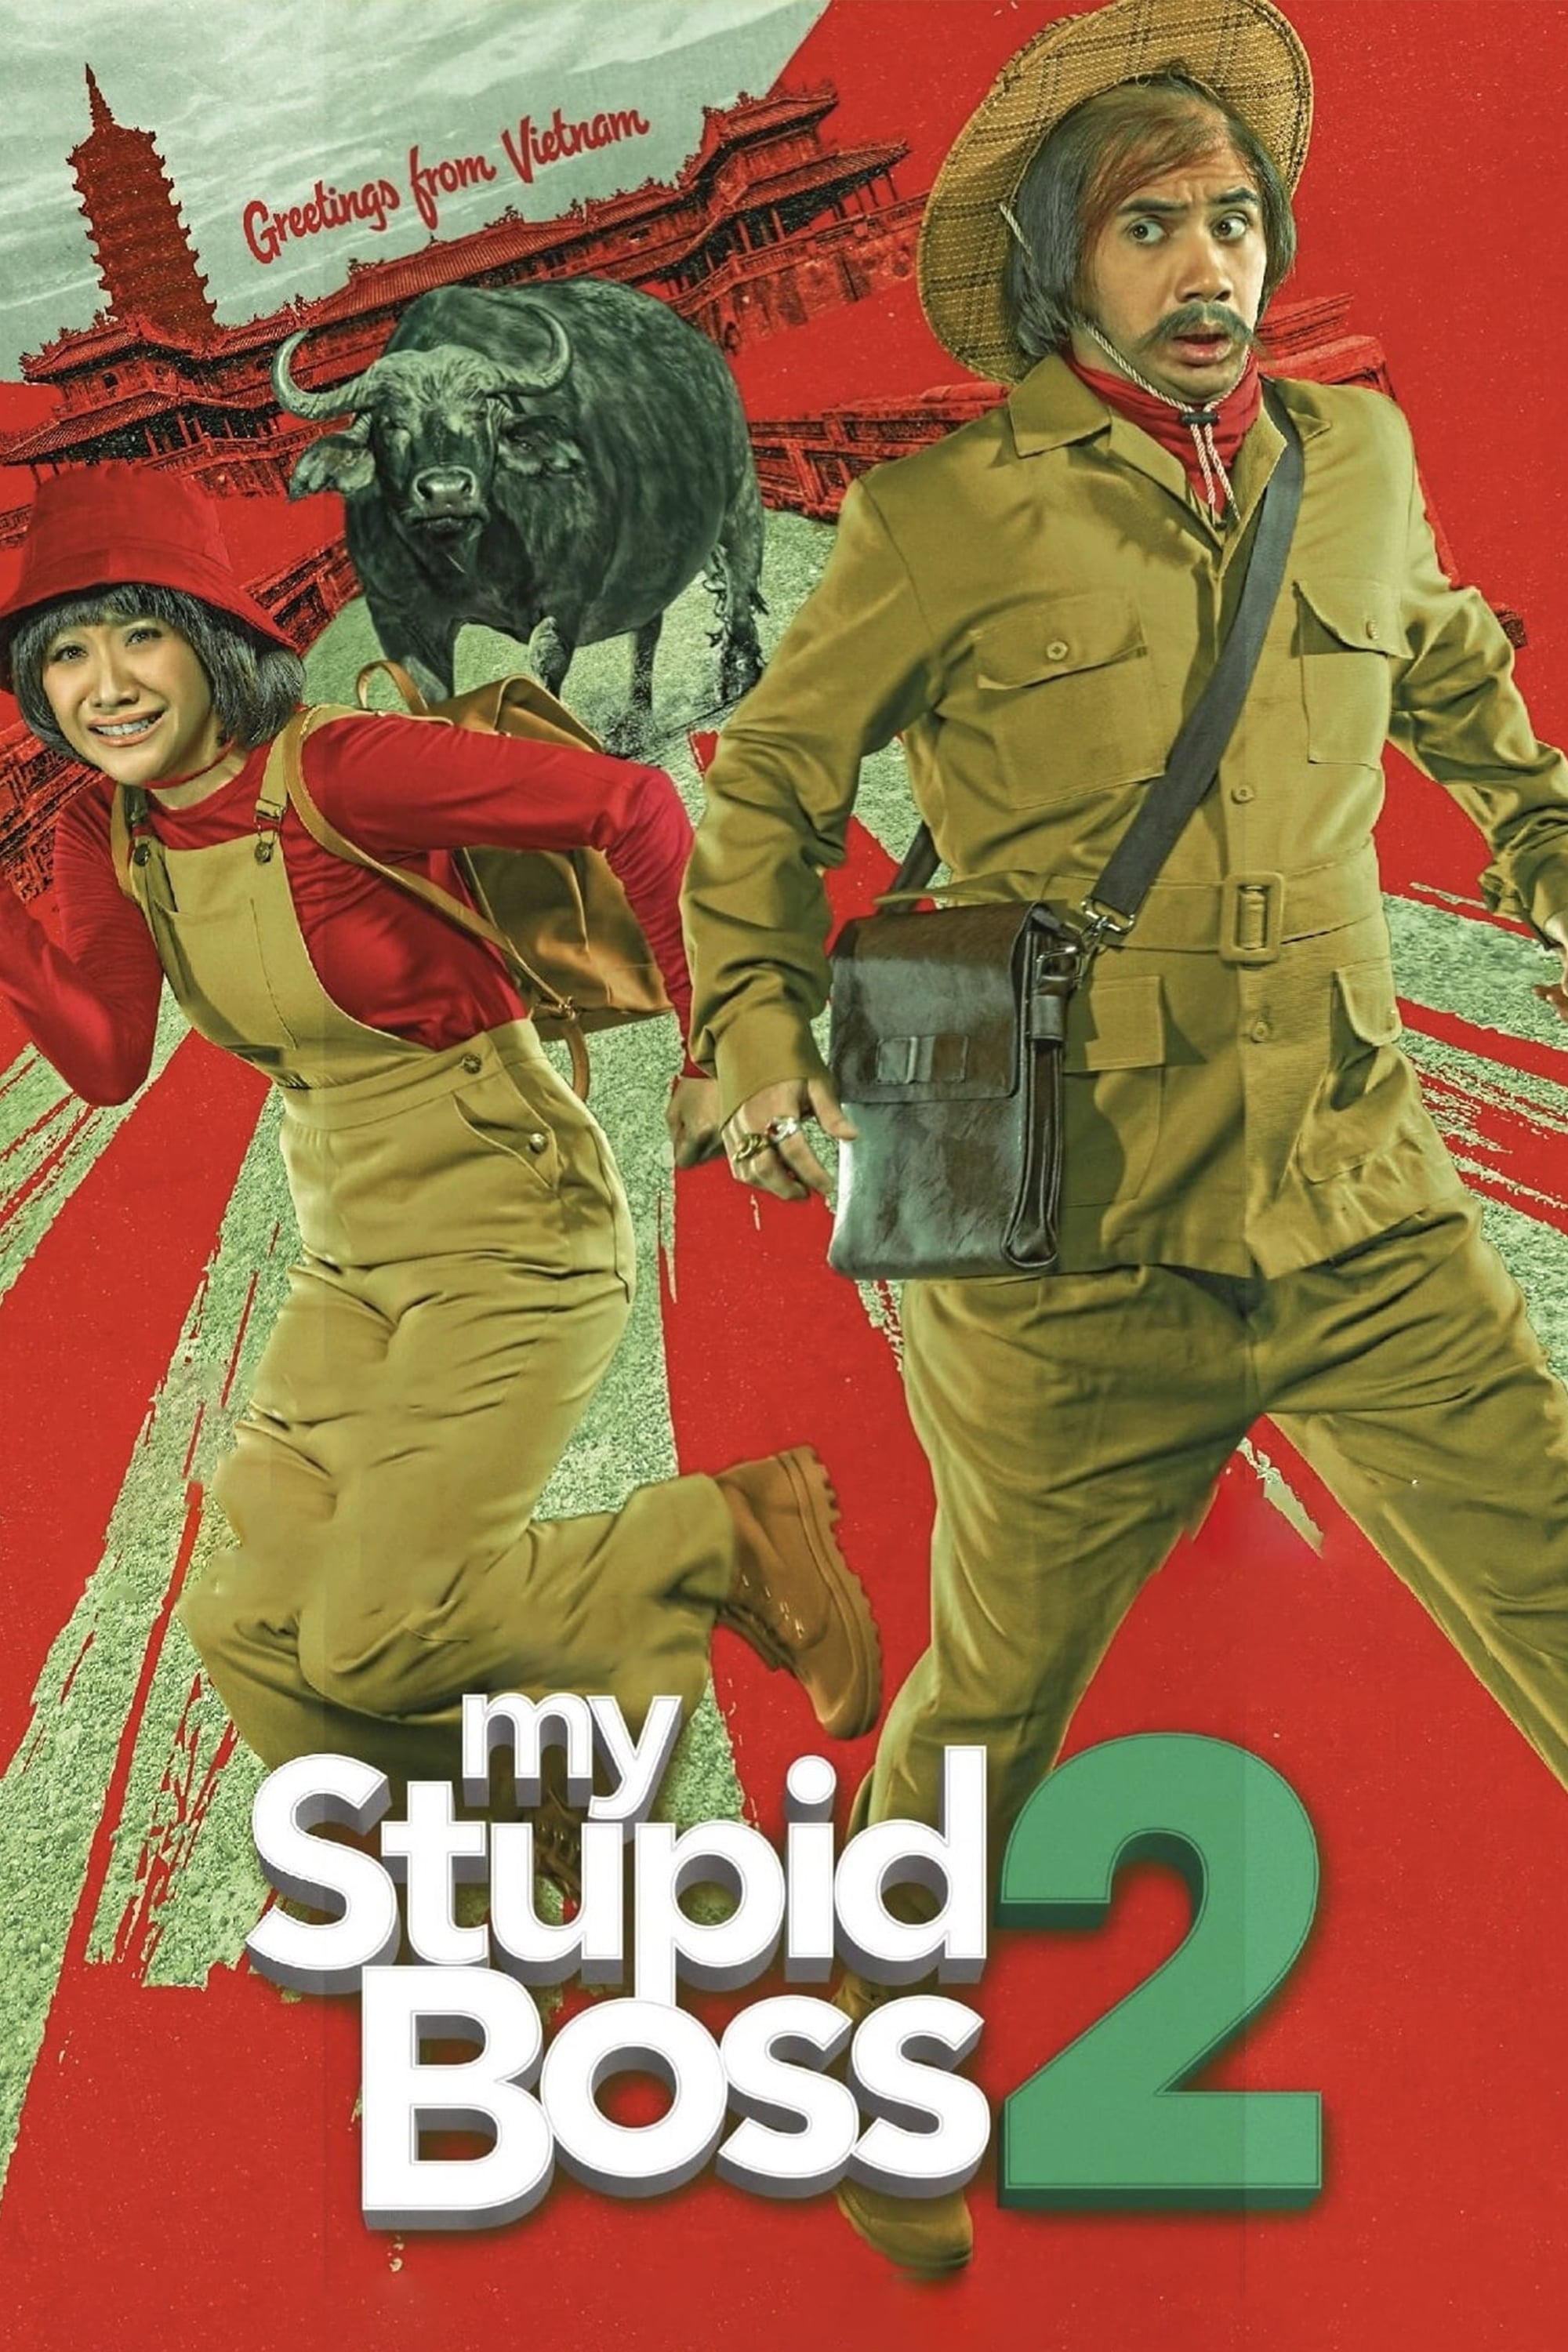 My Stupid Boss 2 (2019) poster - Allmovieland.com